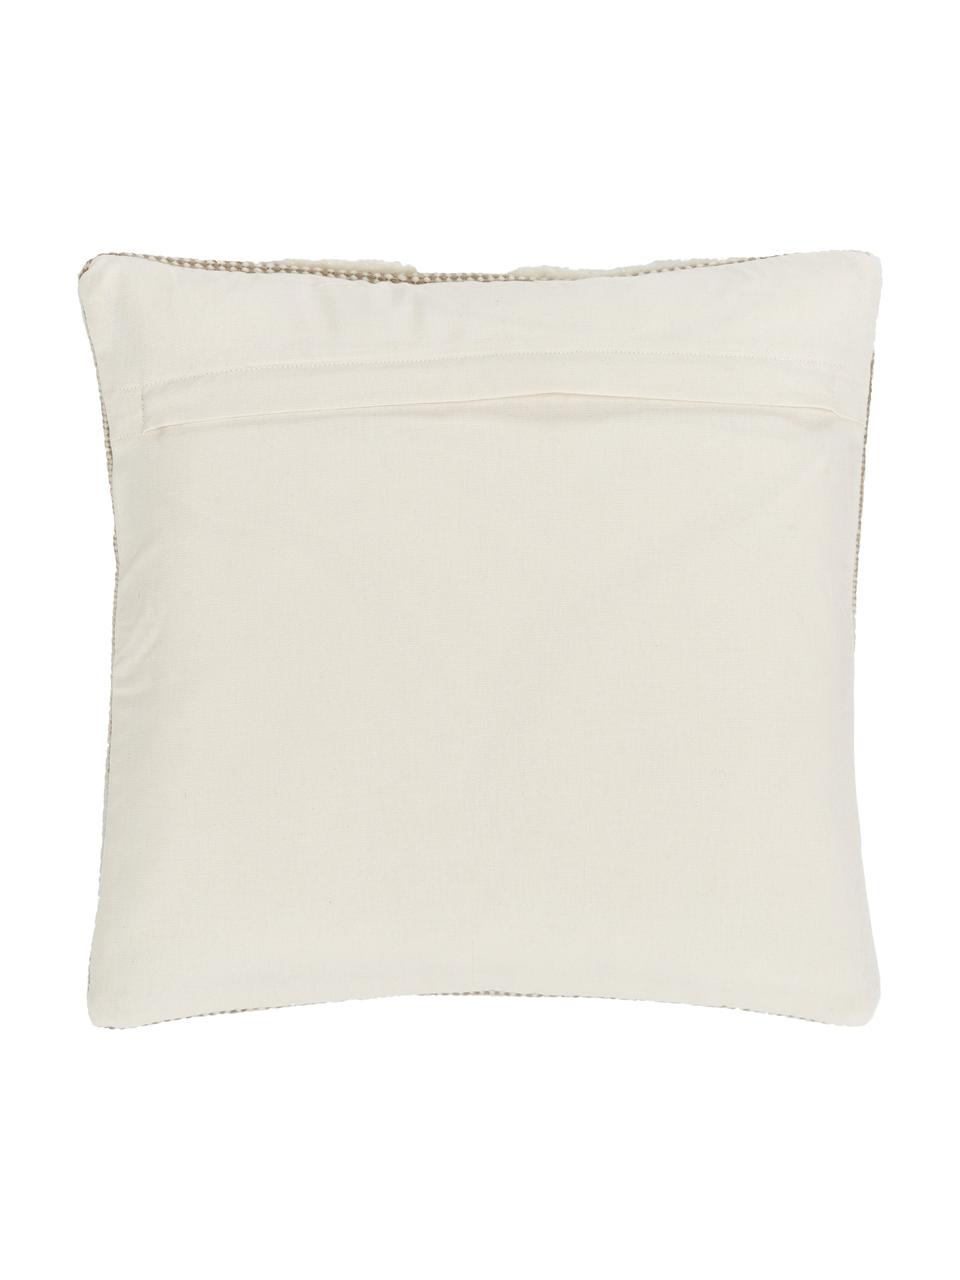 Federa arredo tessuta a mano beige/bianco crema Laine, Retro: 100% cotone, Beige, Larg. 45 x Lung. 45 cm